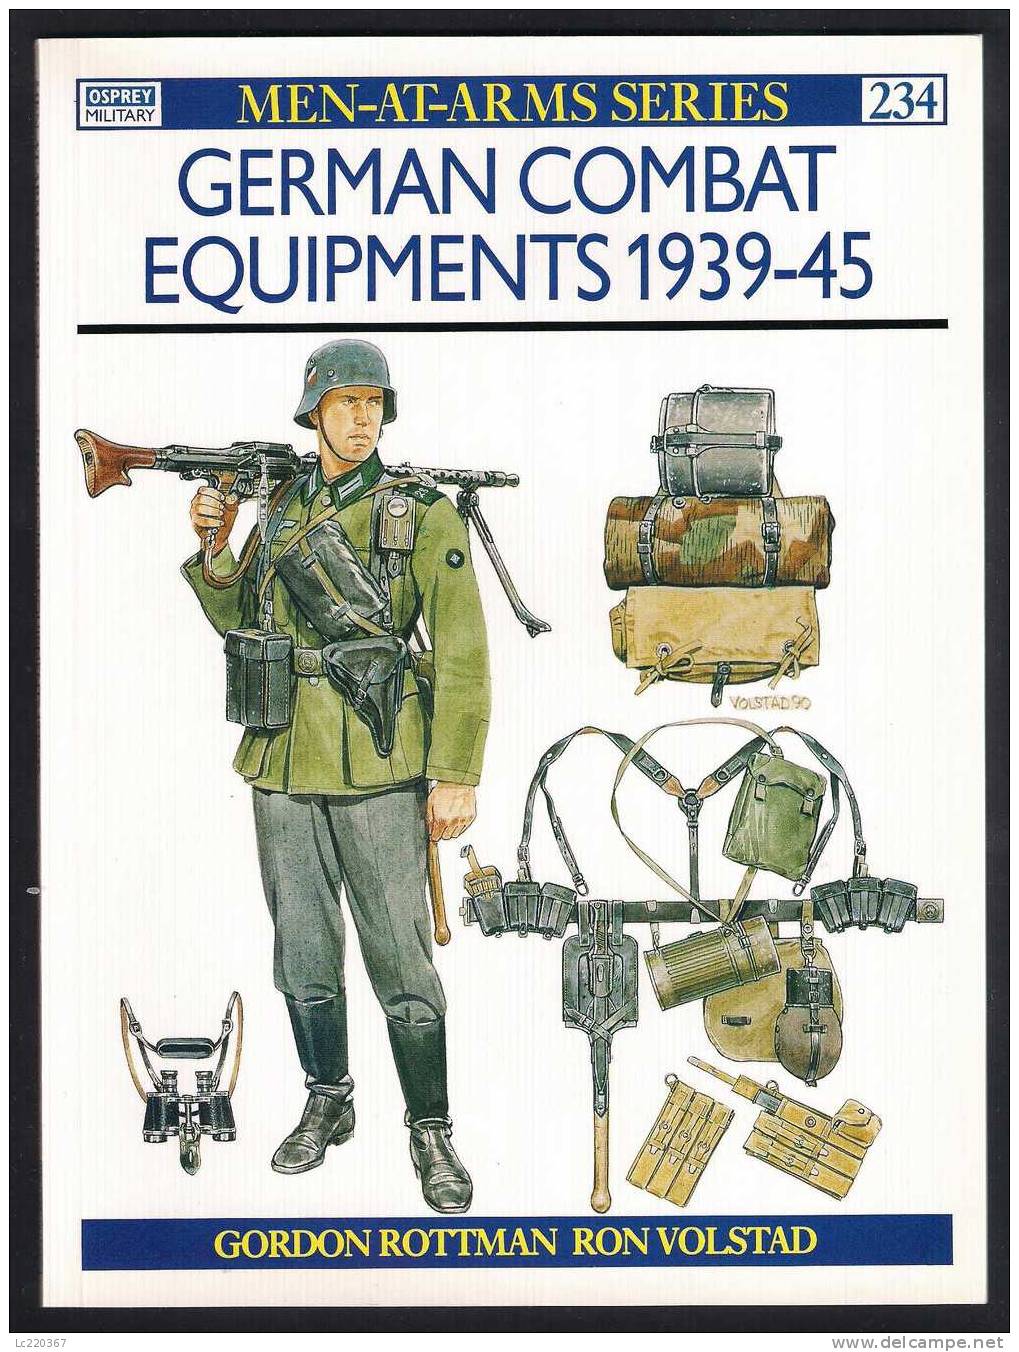 OSPREY MILITARY MEN-AT-ARMS SERIES NR.234 GERMAN COMBAT EQUIPMENTS 1939-45 GORDON ROTTMAN ISBN 0-85045-952-4 - Anglais